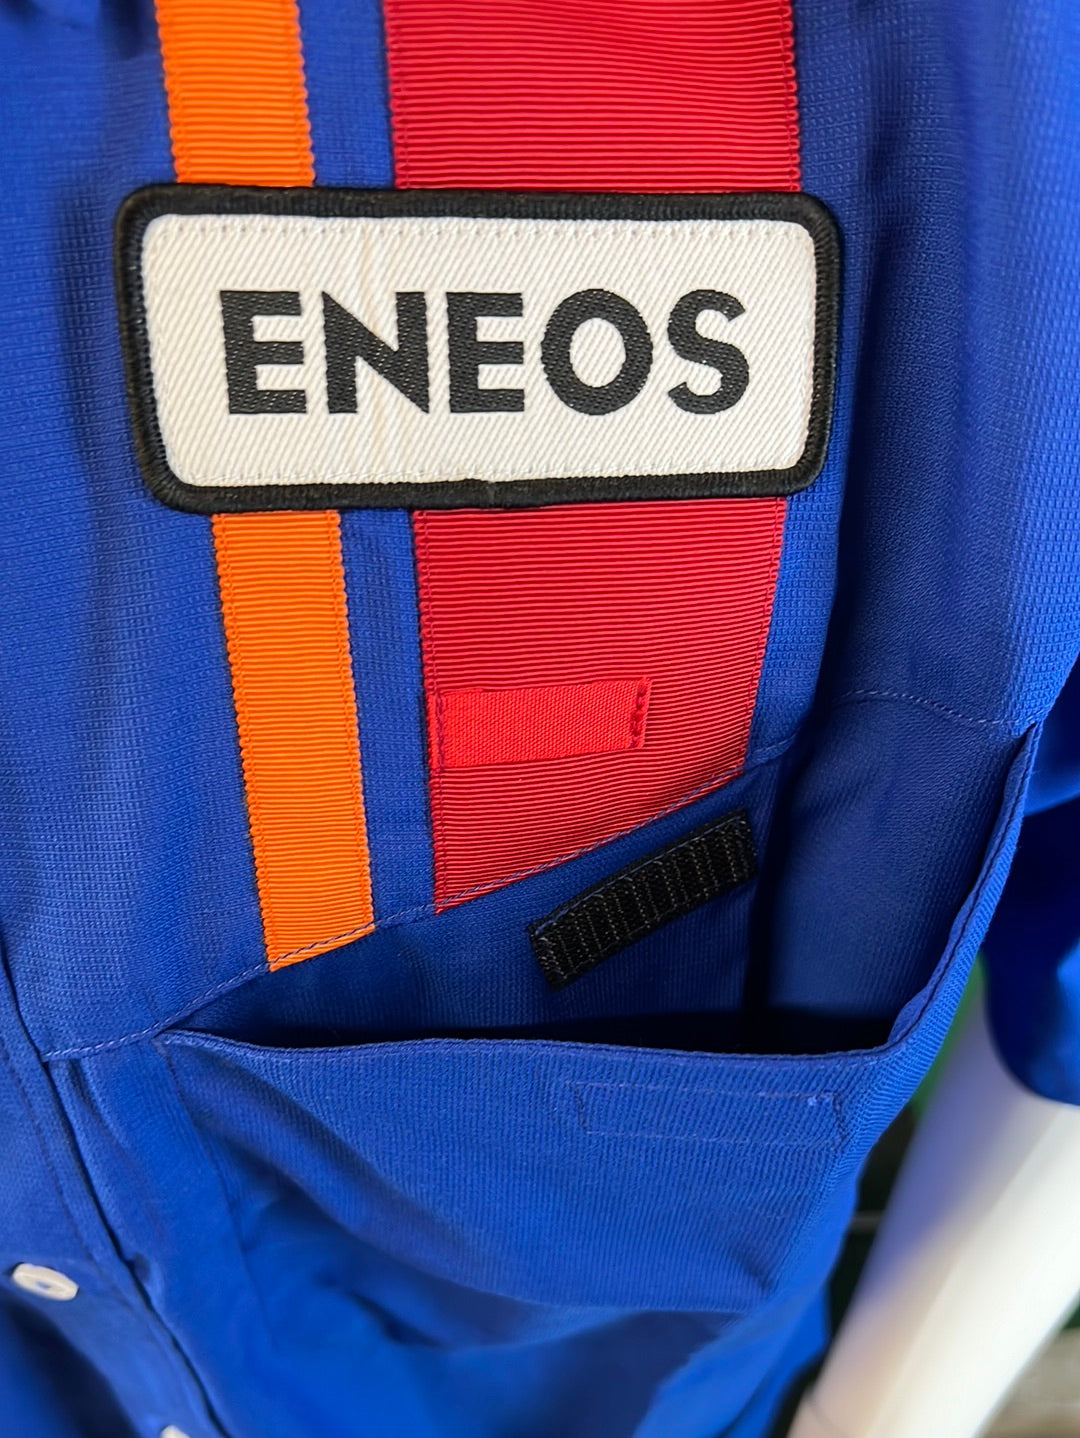 ENEOS - Japanese Service Station Employee Uniform Buttondown Short Sleeve Shirt - 3L